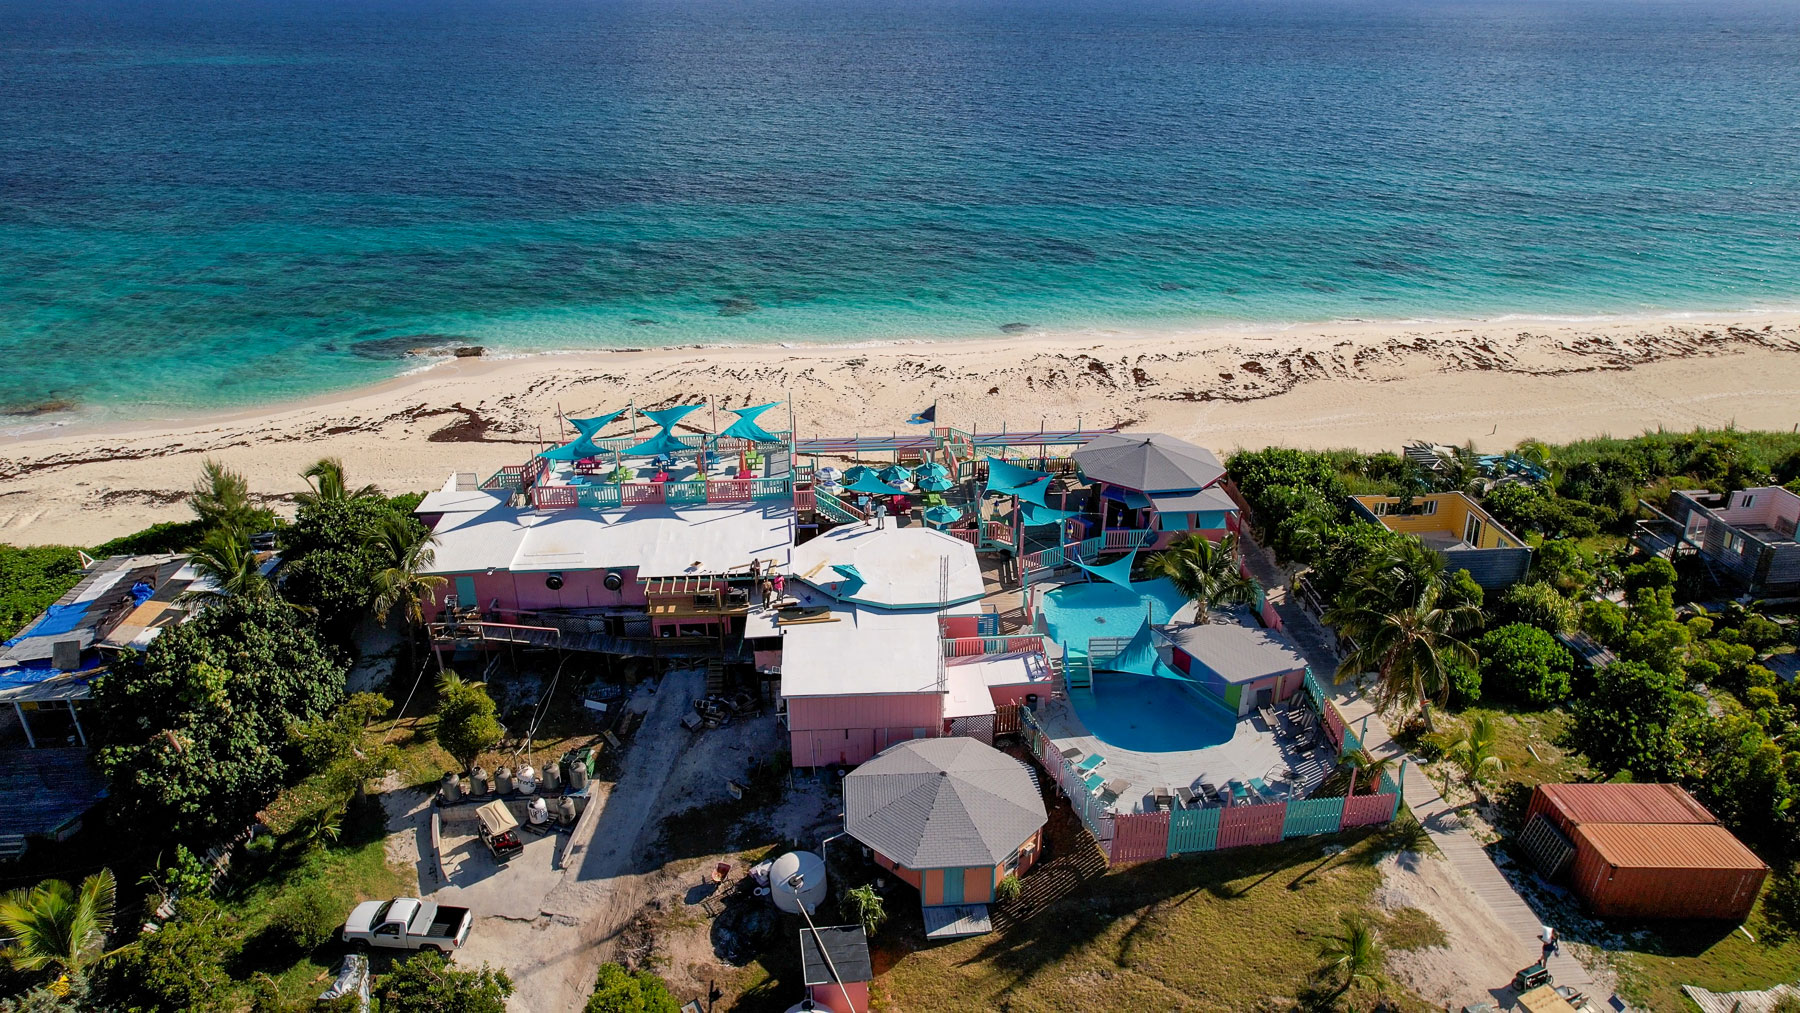 Nipper's Beach bar on Guana Cay - The pool at Nipper's